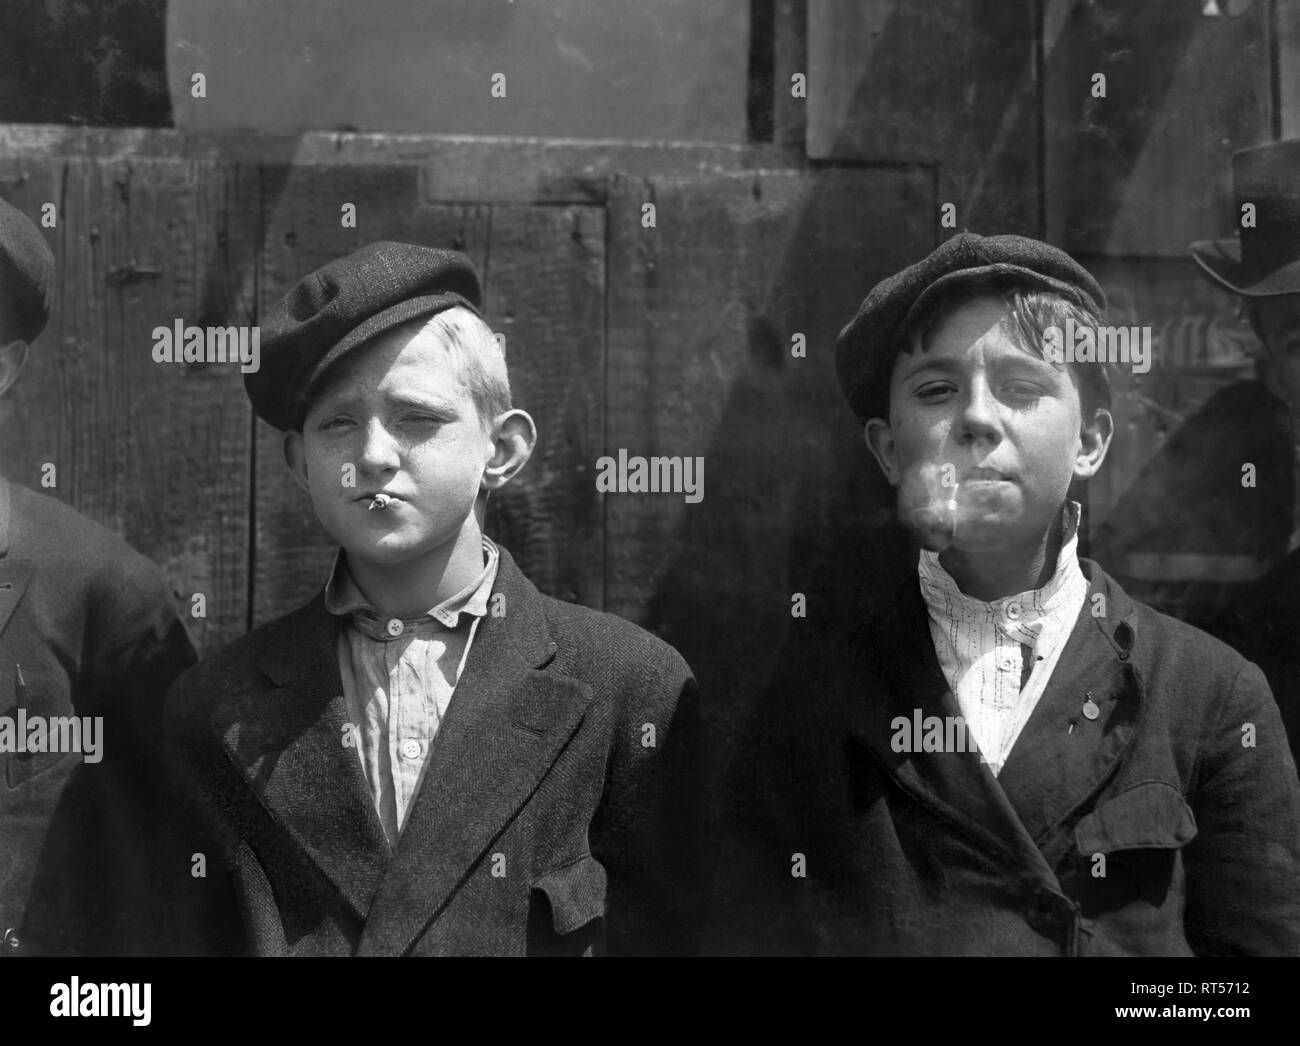 May 9, 1910 - Young newsboys smoking on a St. Louis, Missouri street. Stock Photo